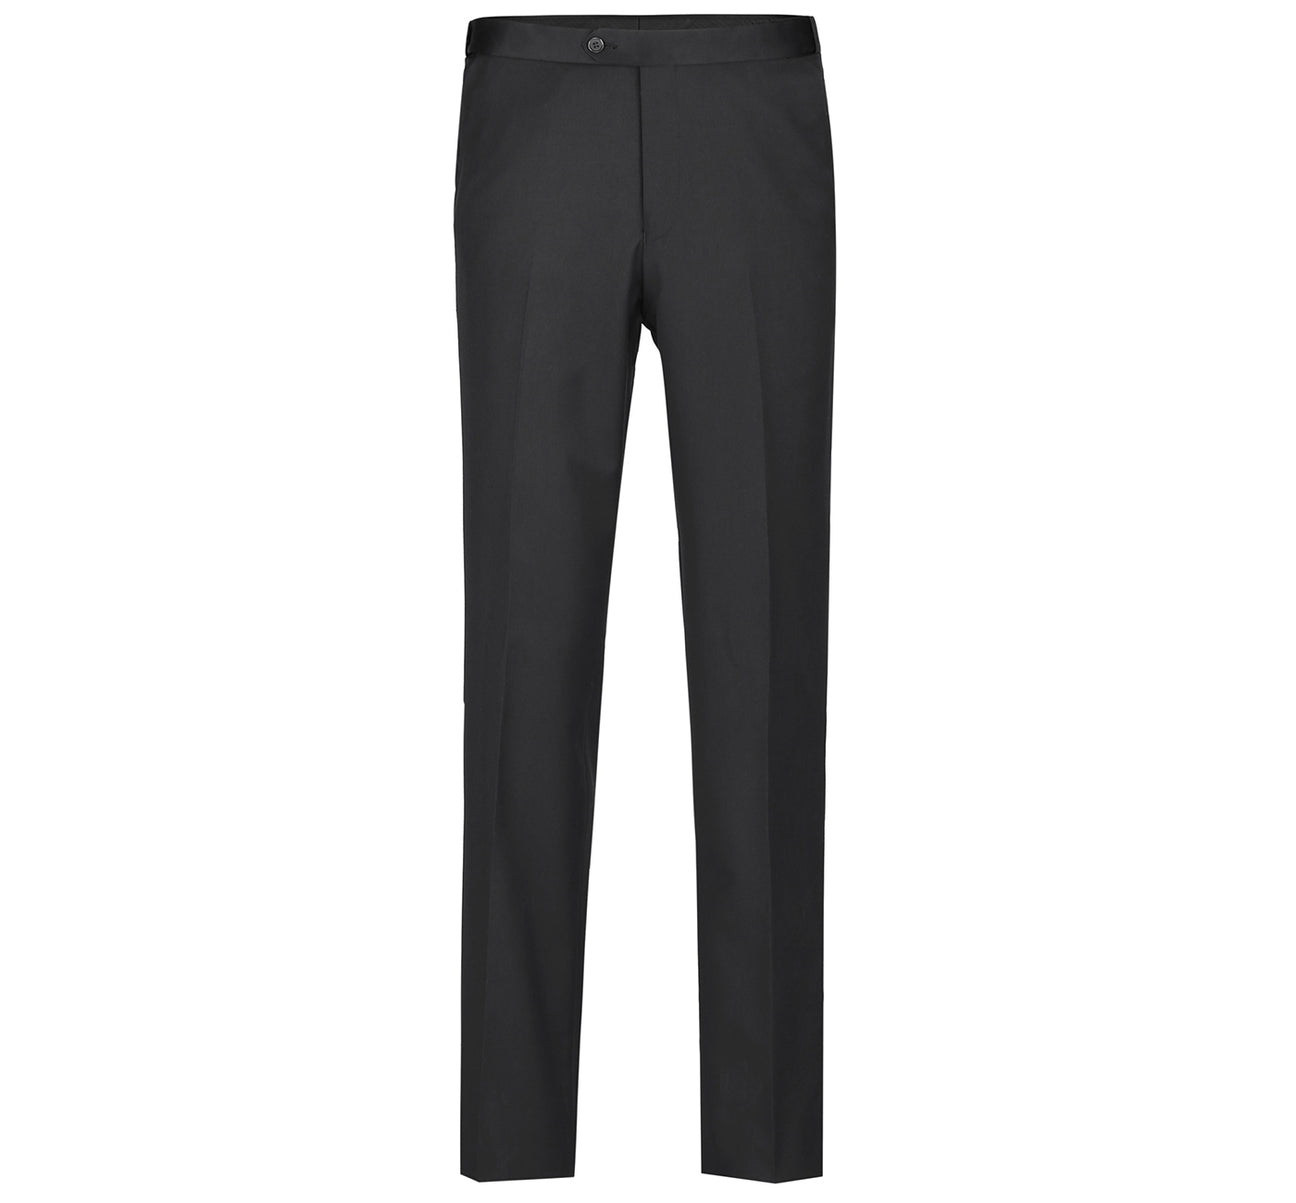 RENOIR Slim Fit Black Tuxedo Peak Lapel Dress Suit 201-1